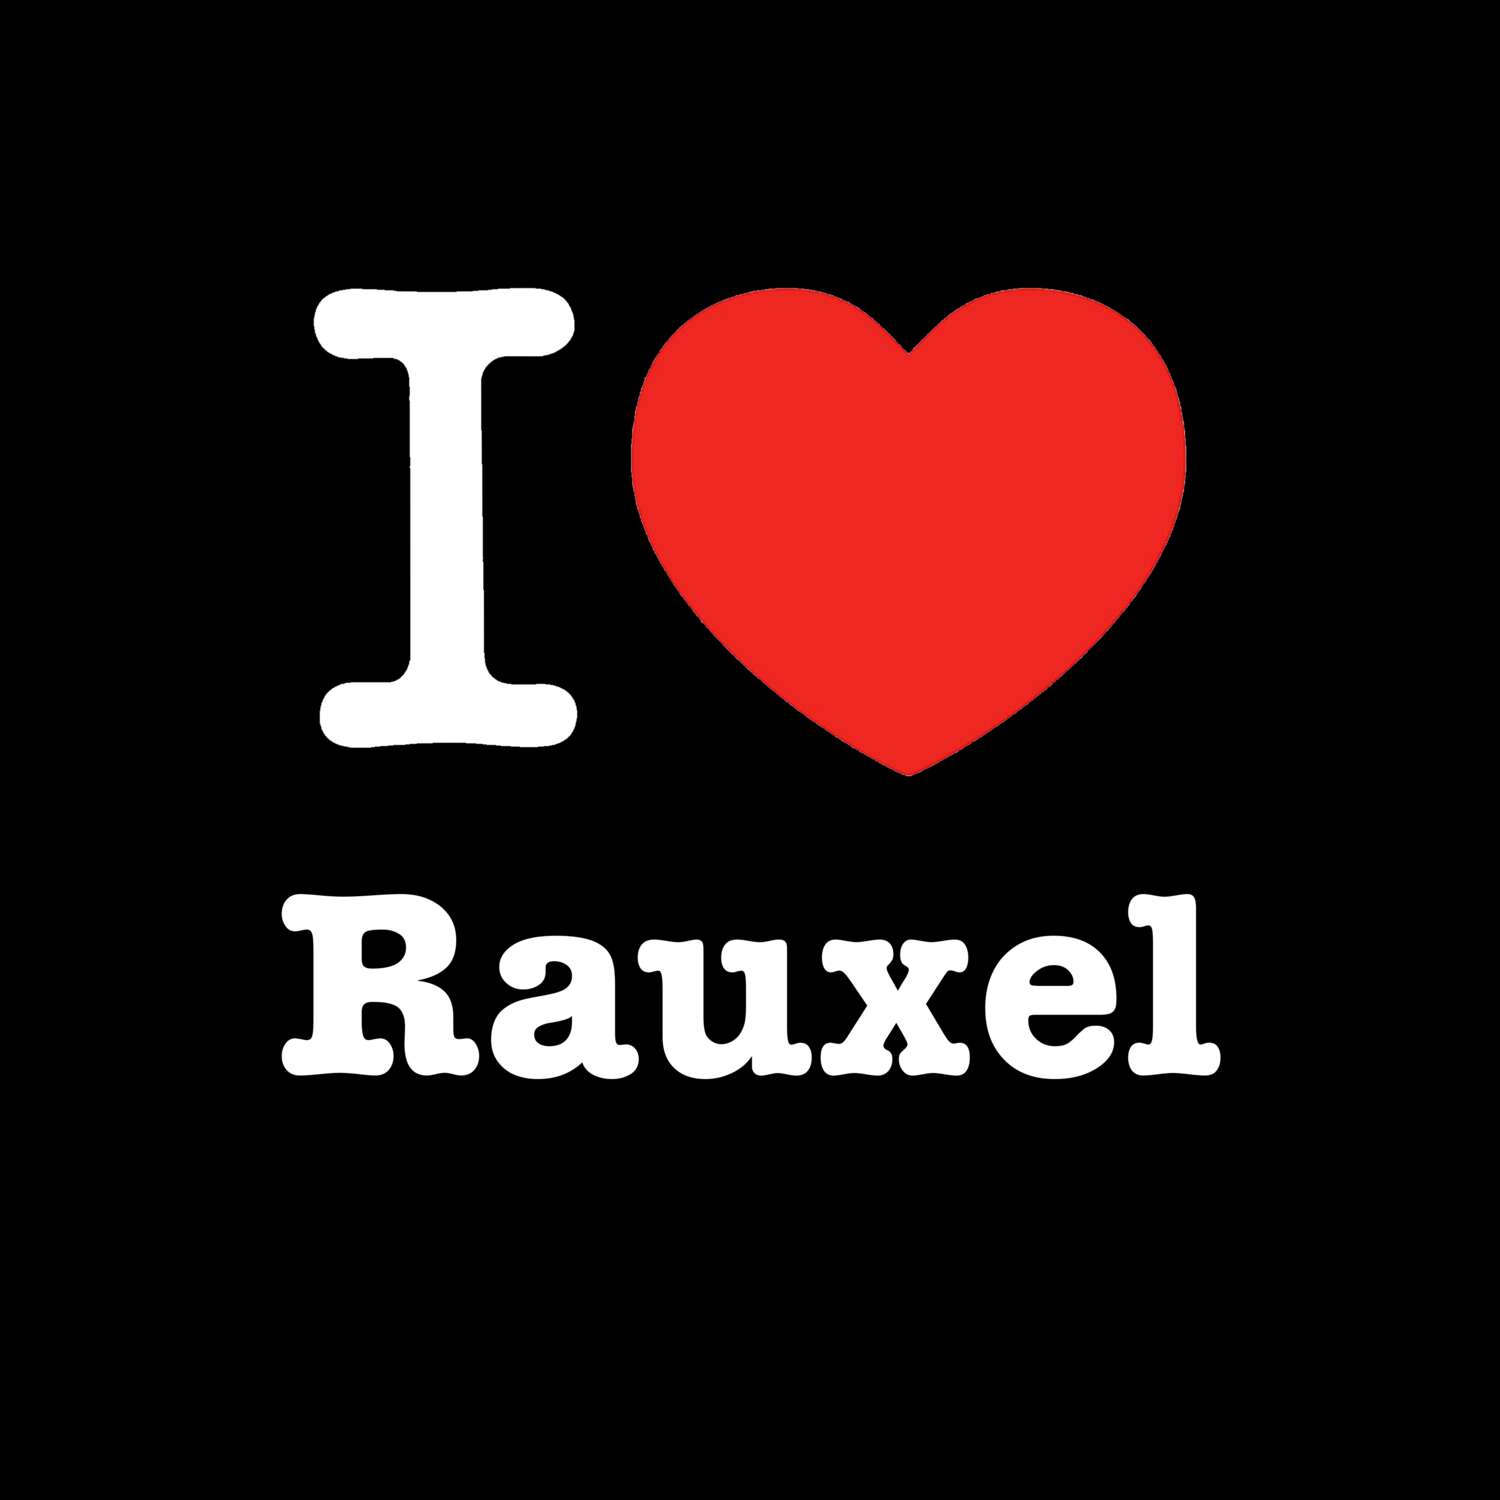 Rauxel T-Shirt »I love«